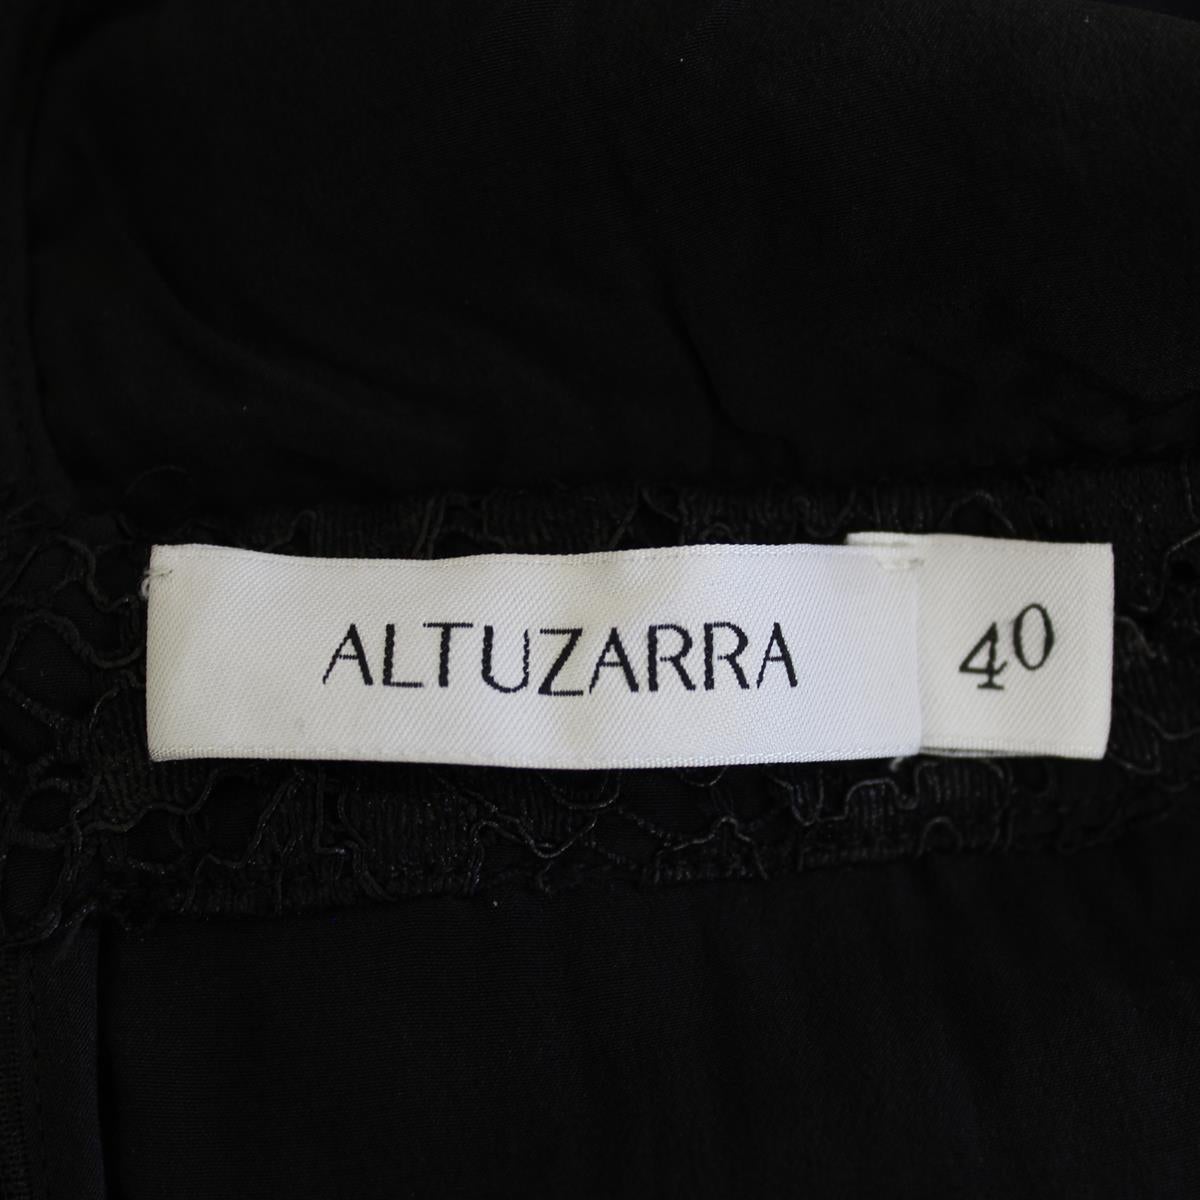 Altuzarra Lace Dress IT 40 For Sale 1